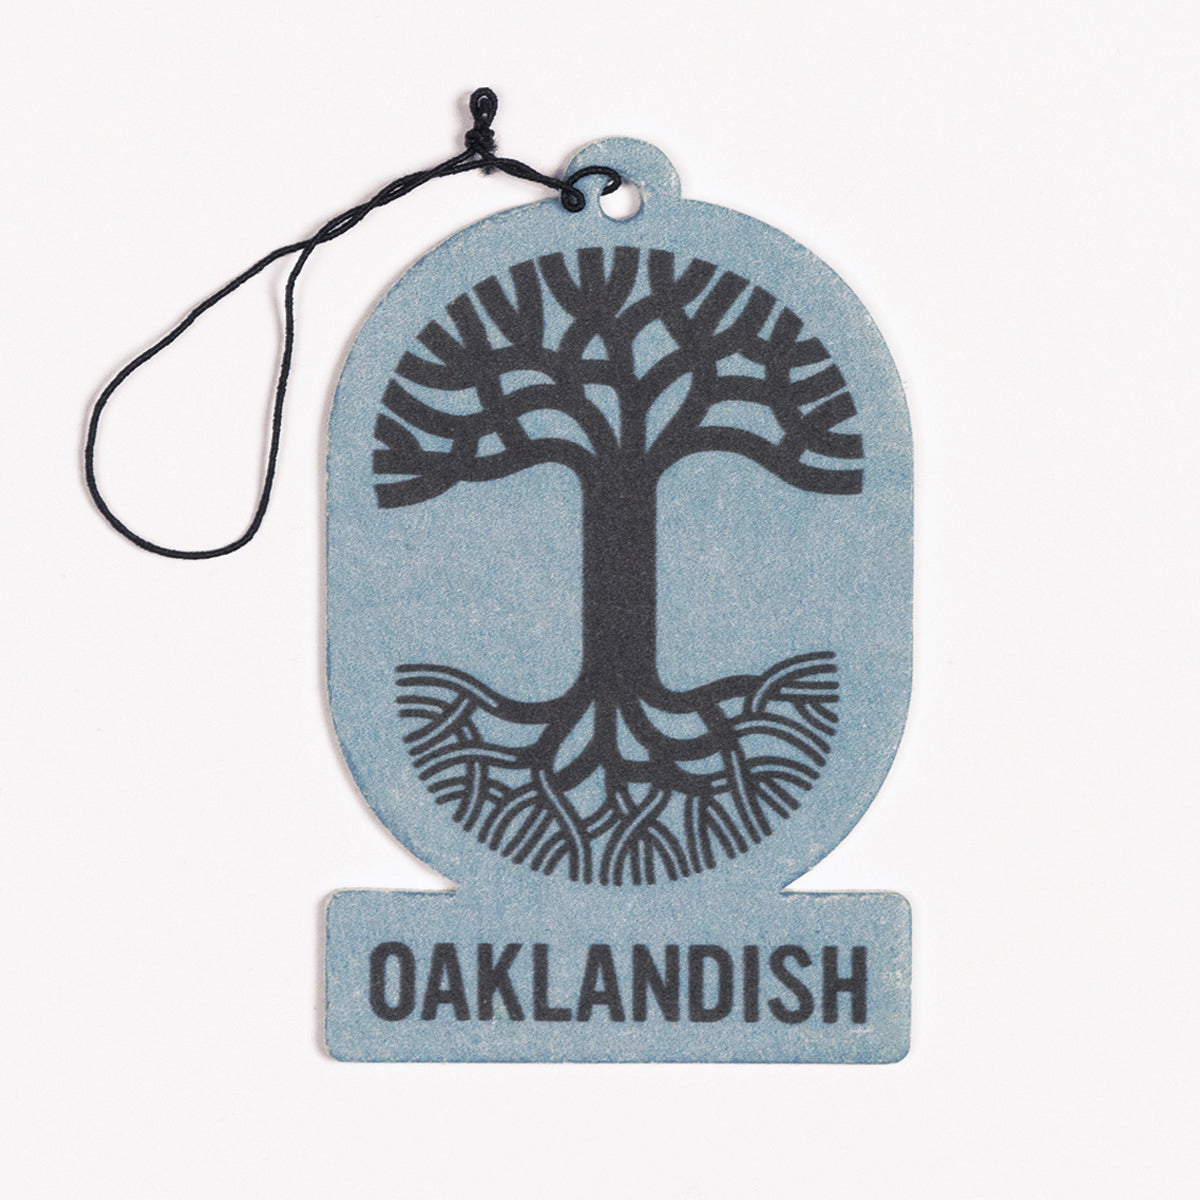 Blue felt air freshener with the Oaklandish tree logo and wordmark.